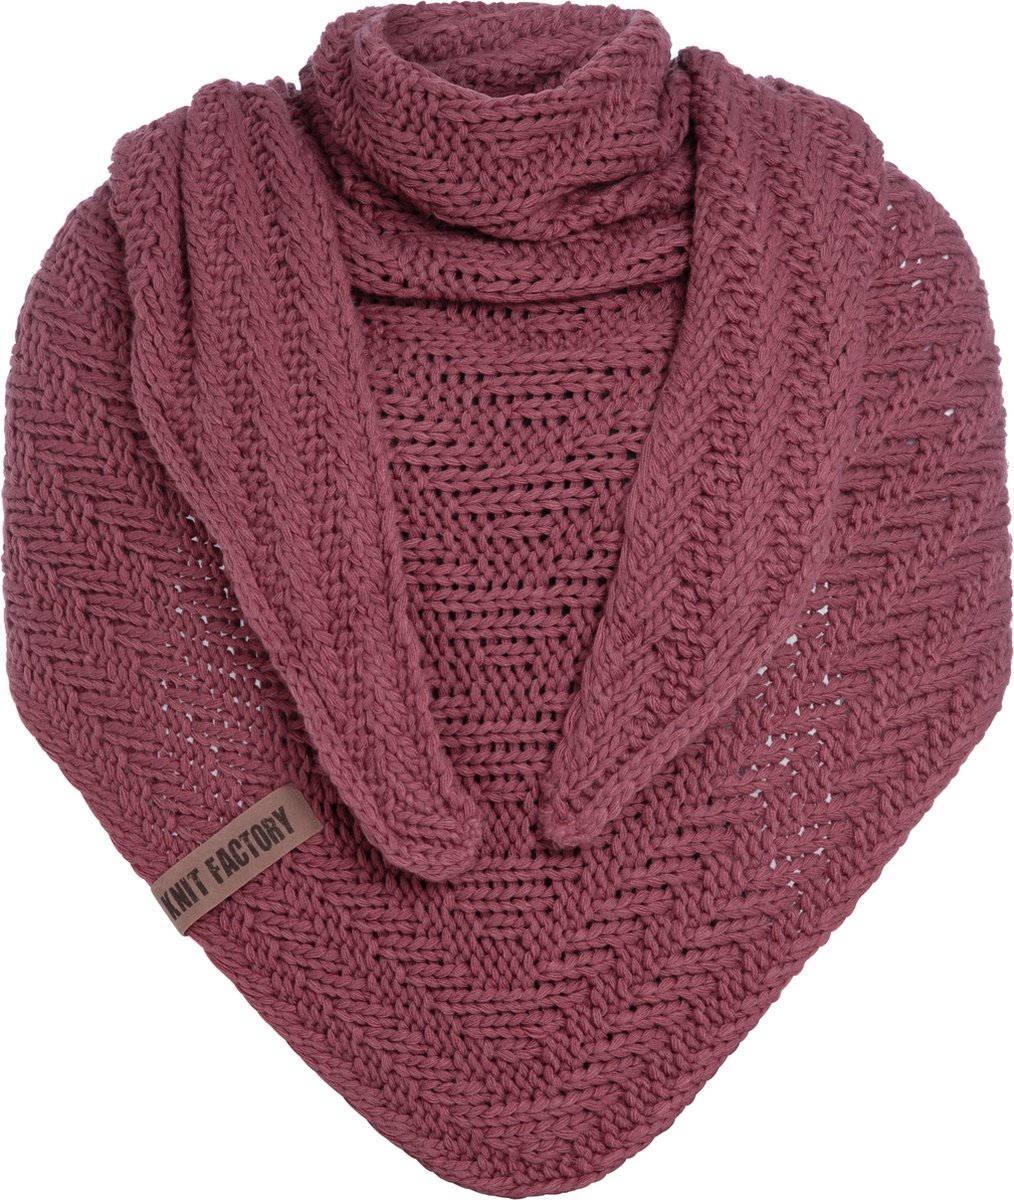 Knit Factory Sally Gebreide Omslagdoek - Driehoek Sjaal Dames - Dames sjaal - Wintersjaal - Stola - Wollen sjaal - Rode sjaal - Stone Red - 220x85 cm - Grof gebreid